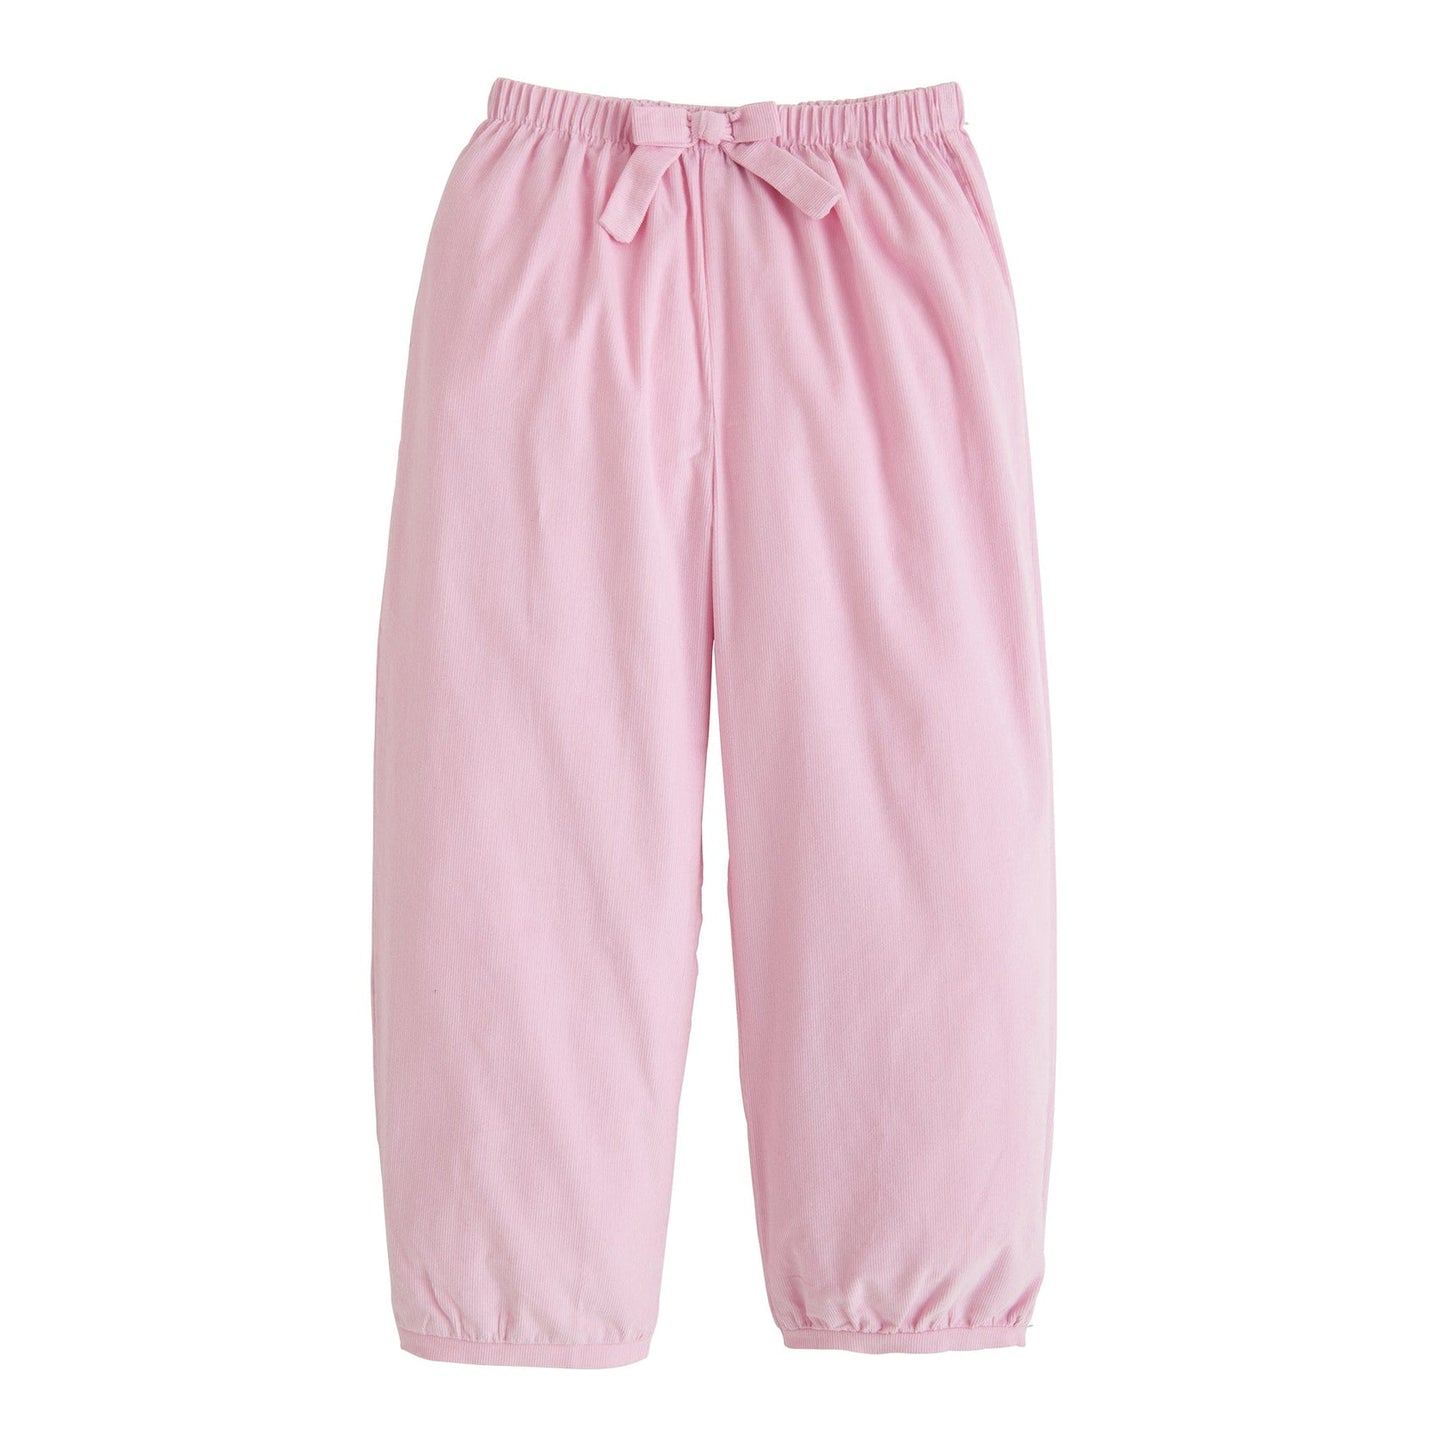 Girls Corduroy Banded Bow Pants - Light Pink